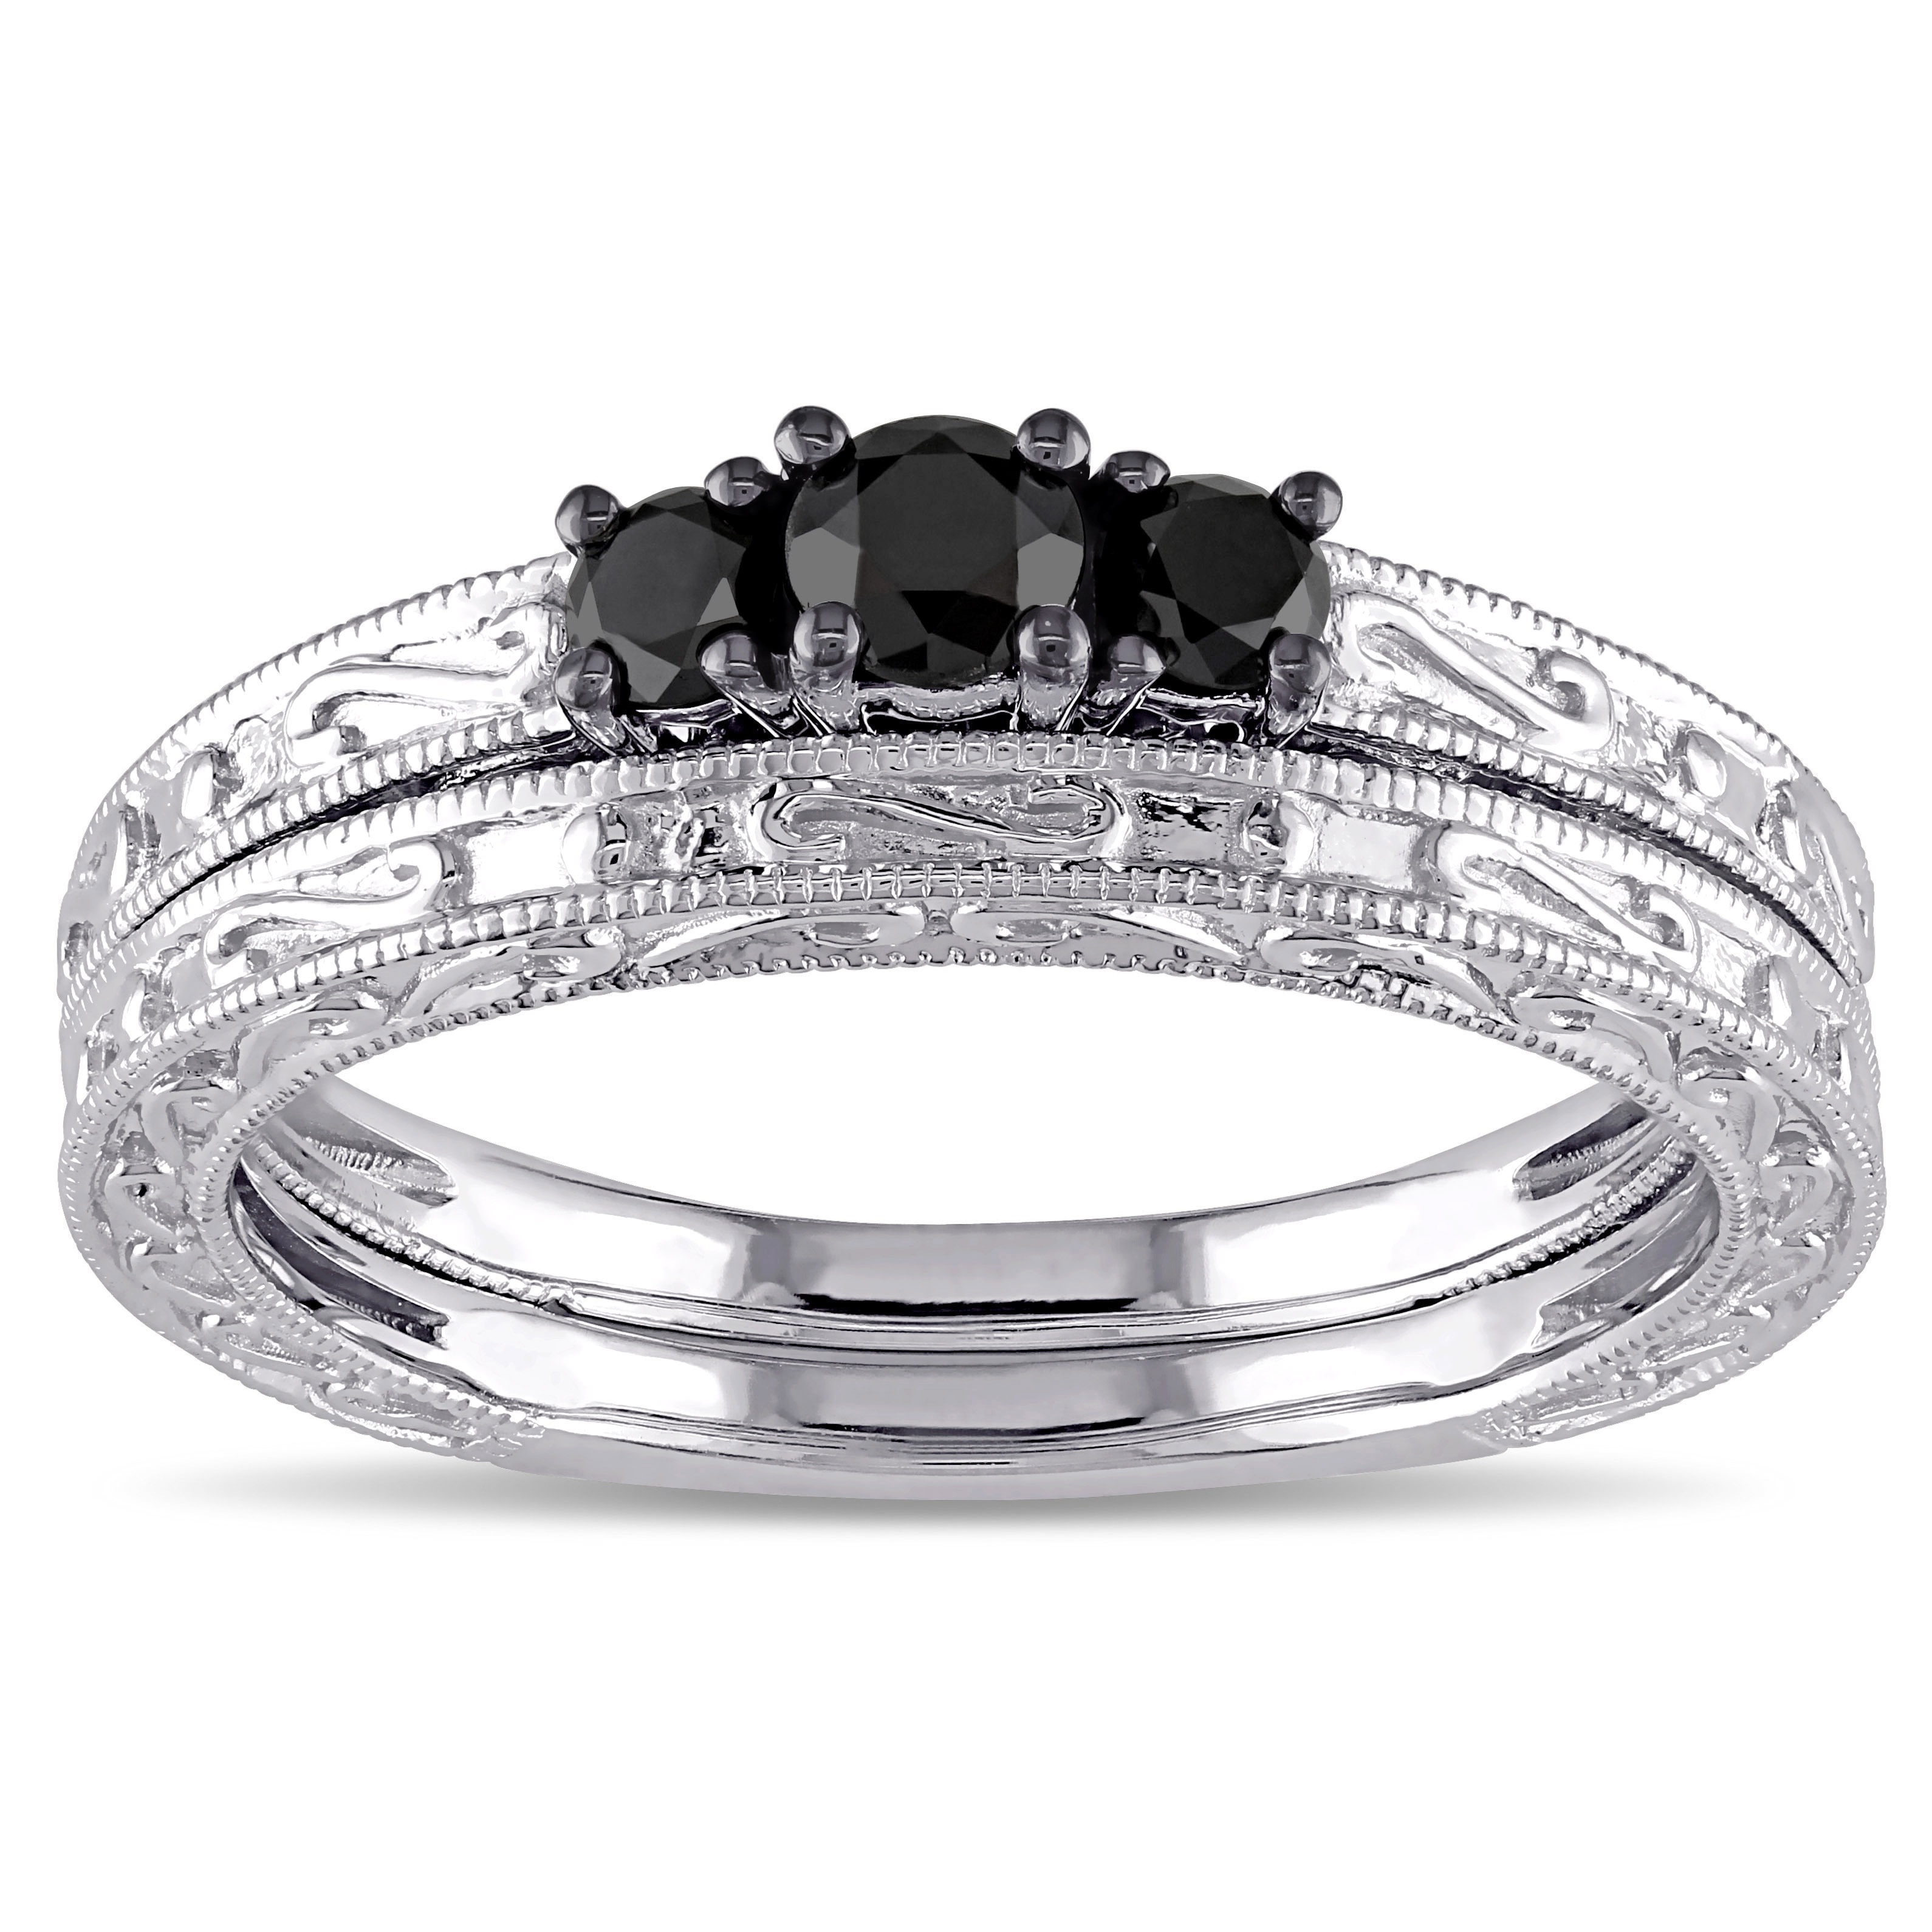 Black Wedding Rings Buy Engagement Rings, Bridal Sets